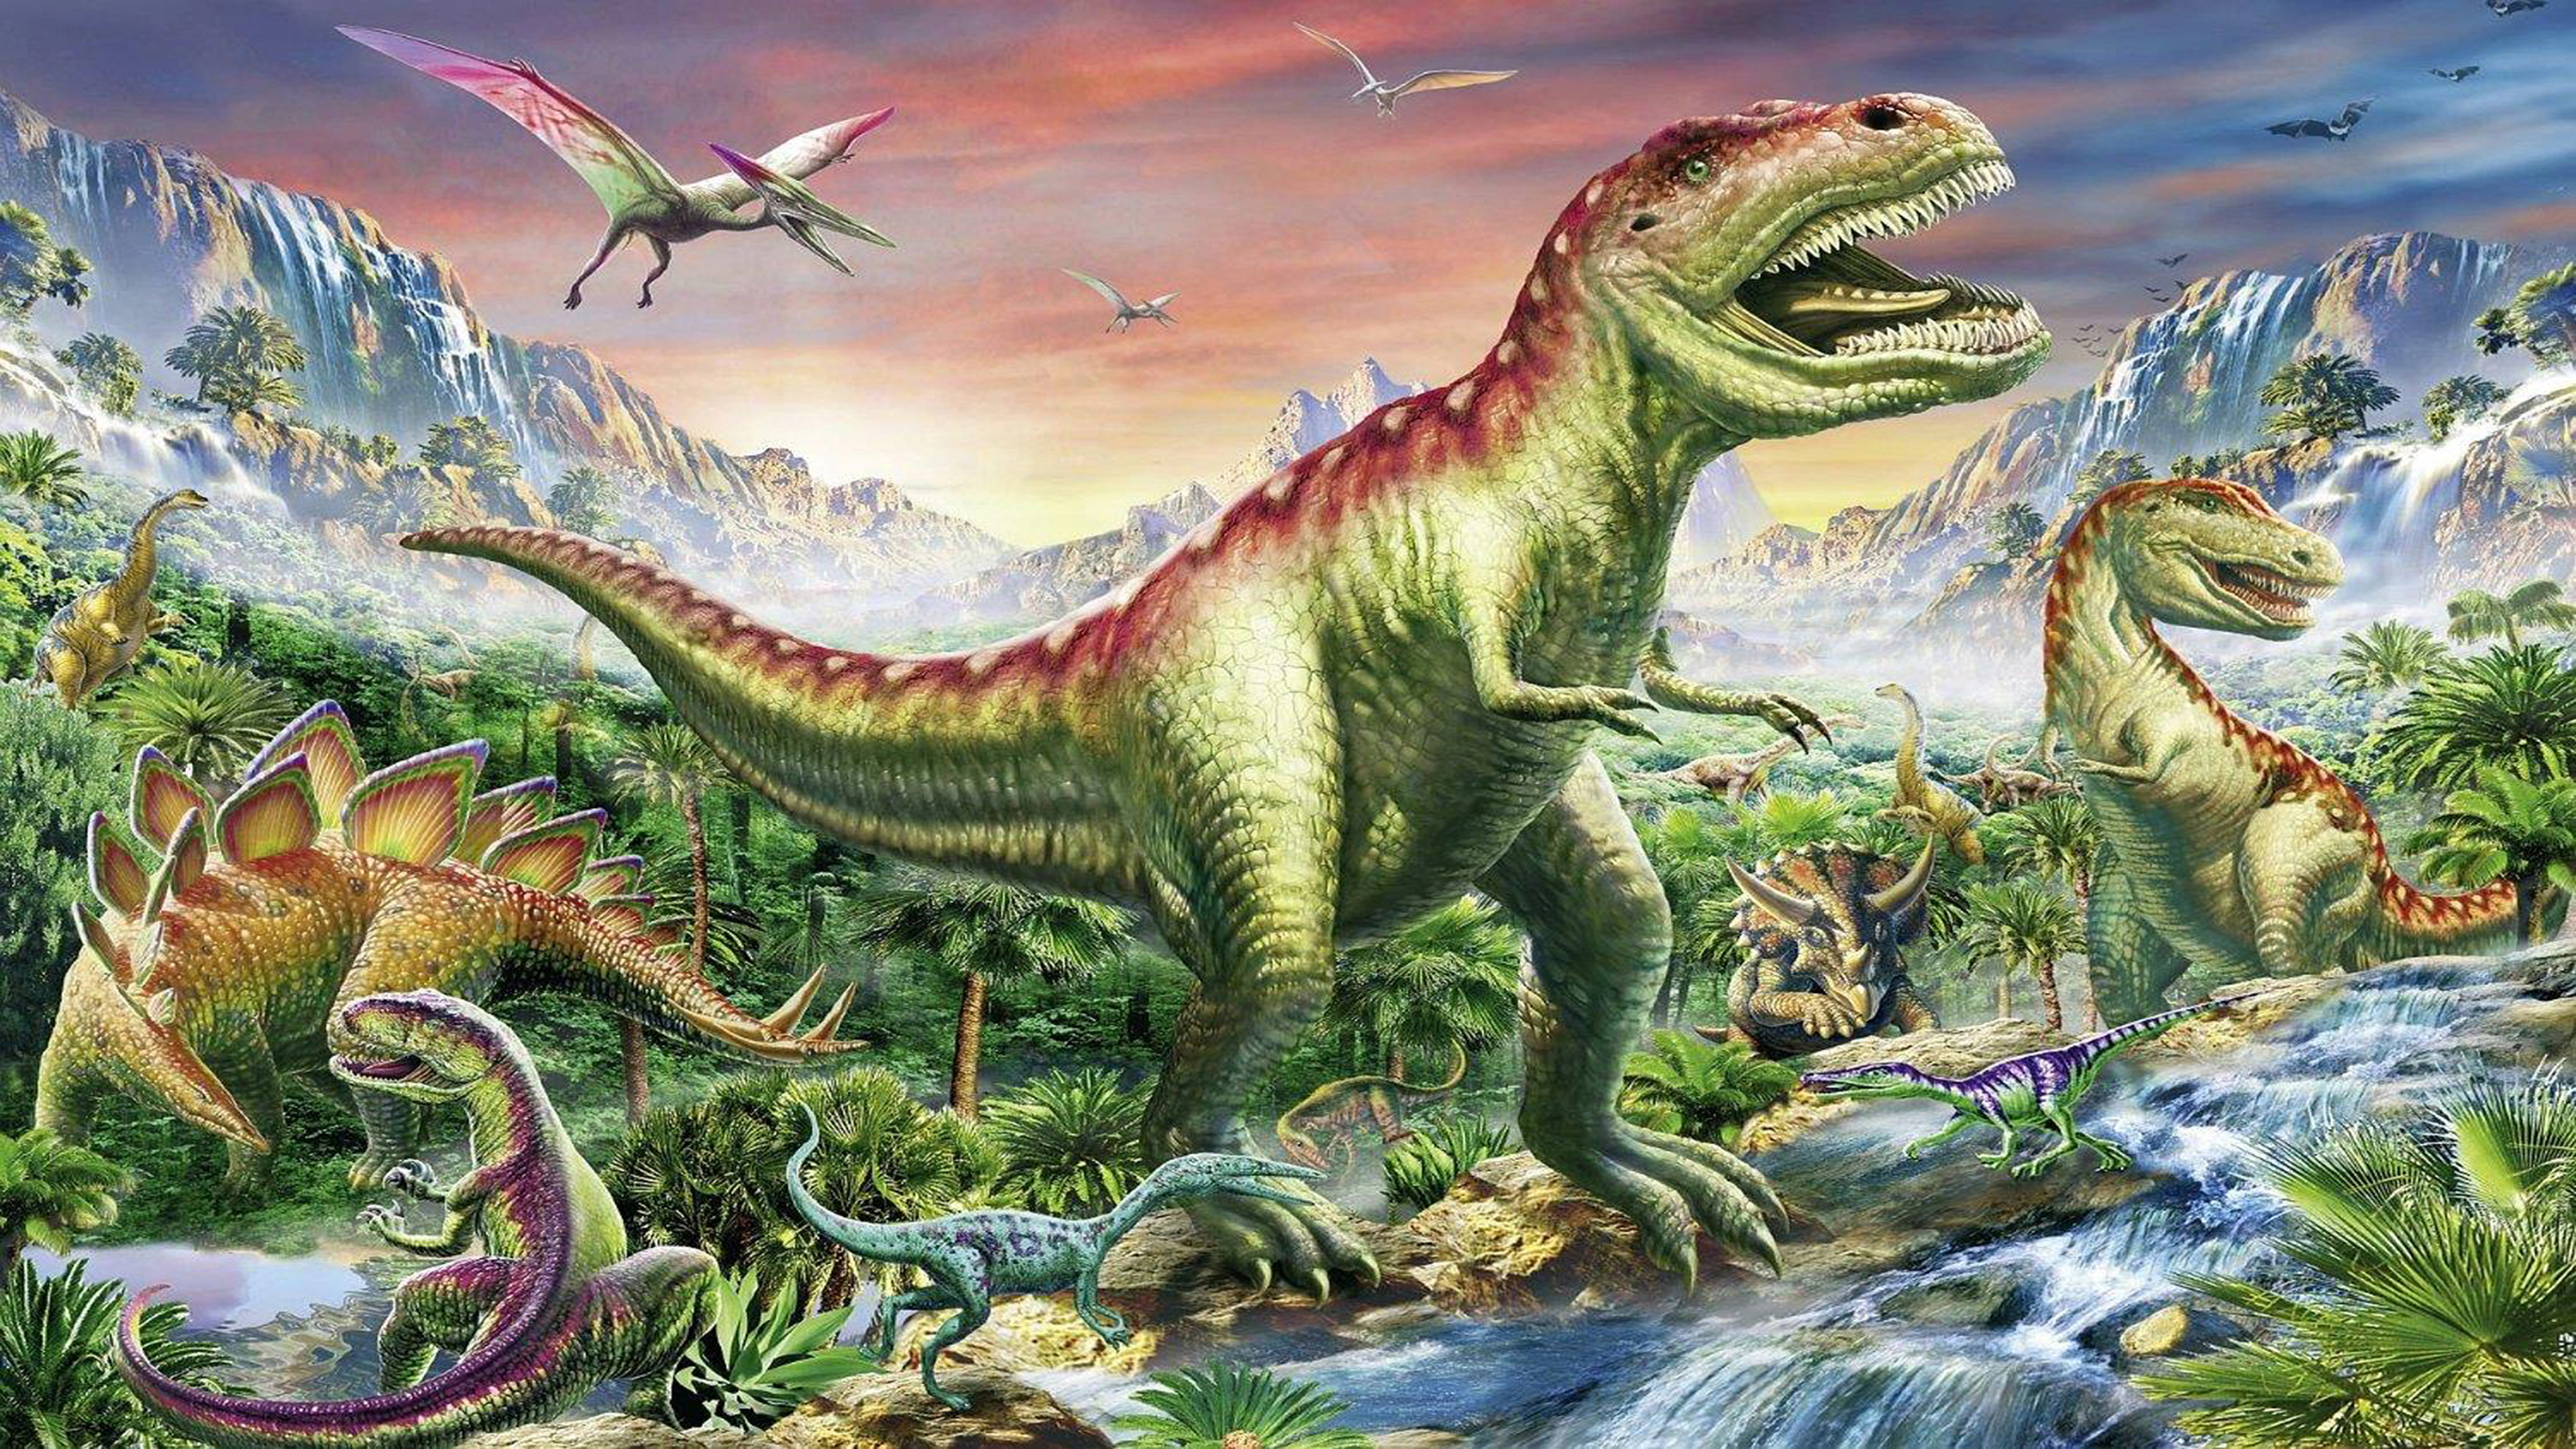  75  Dinosaurs Wallpapers on WallpaperSafari